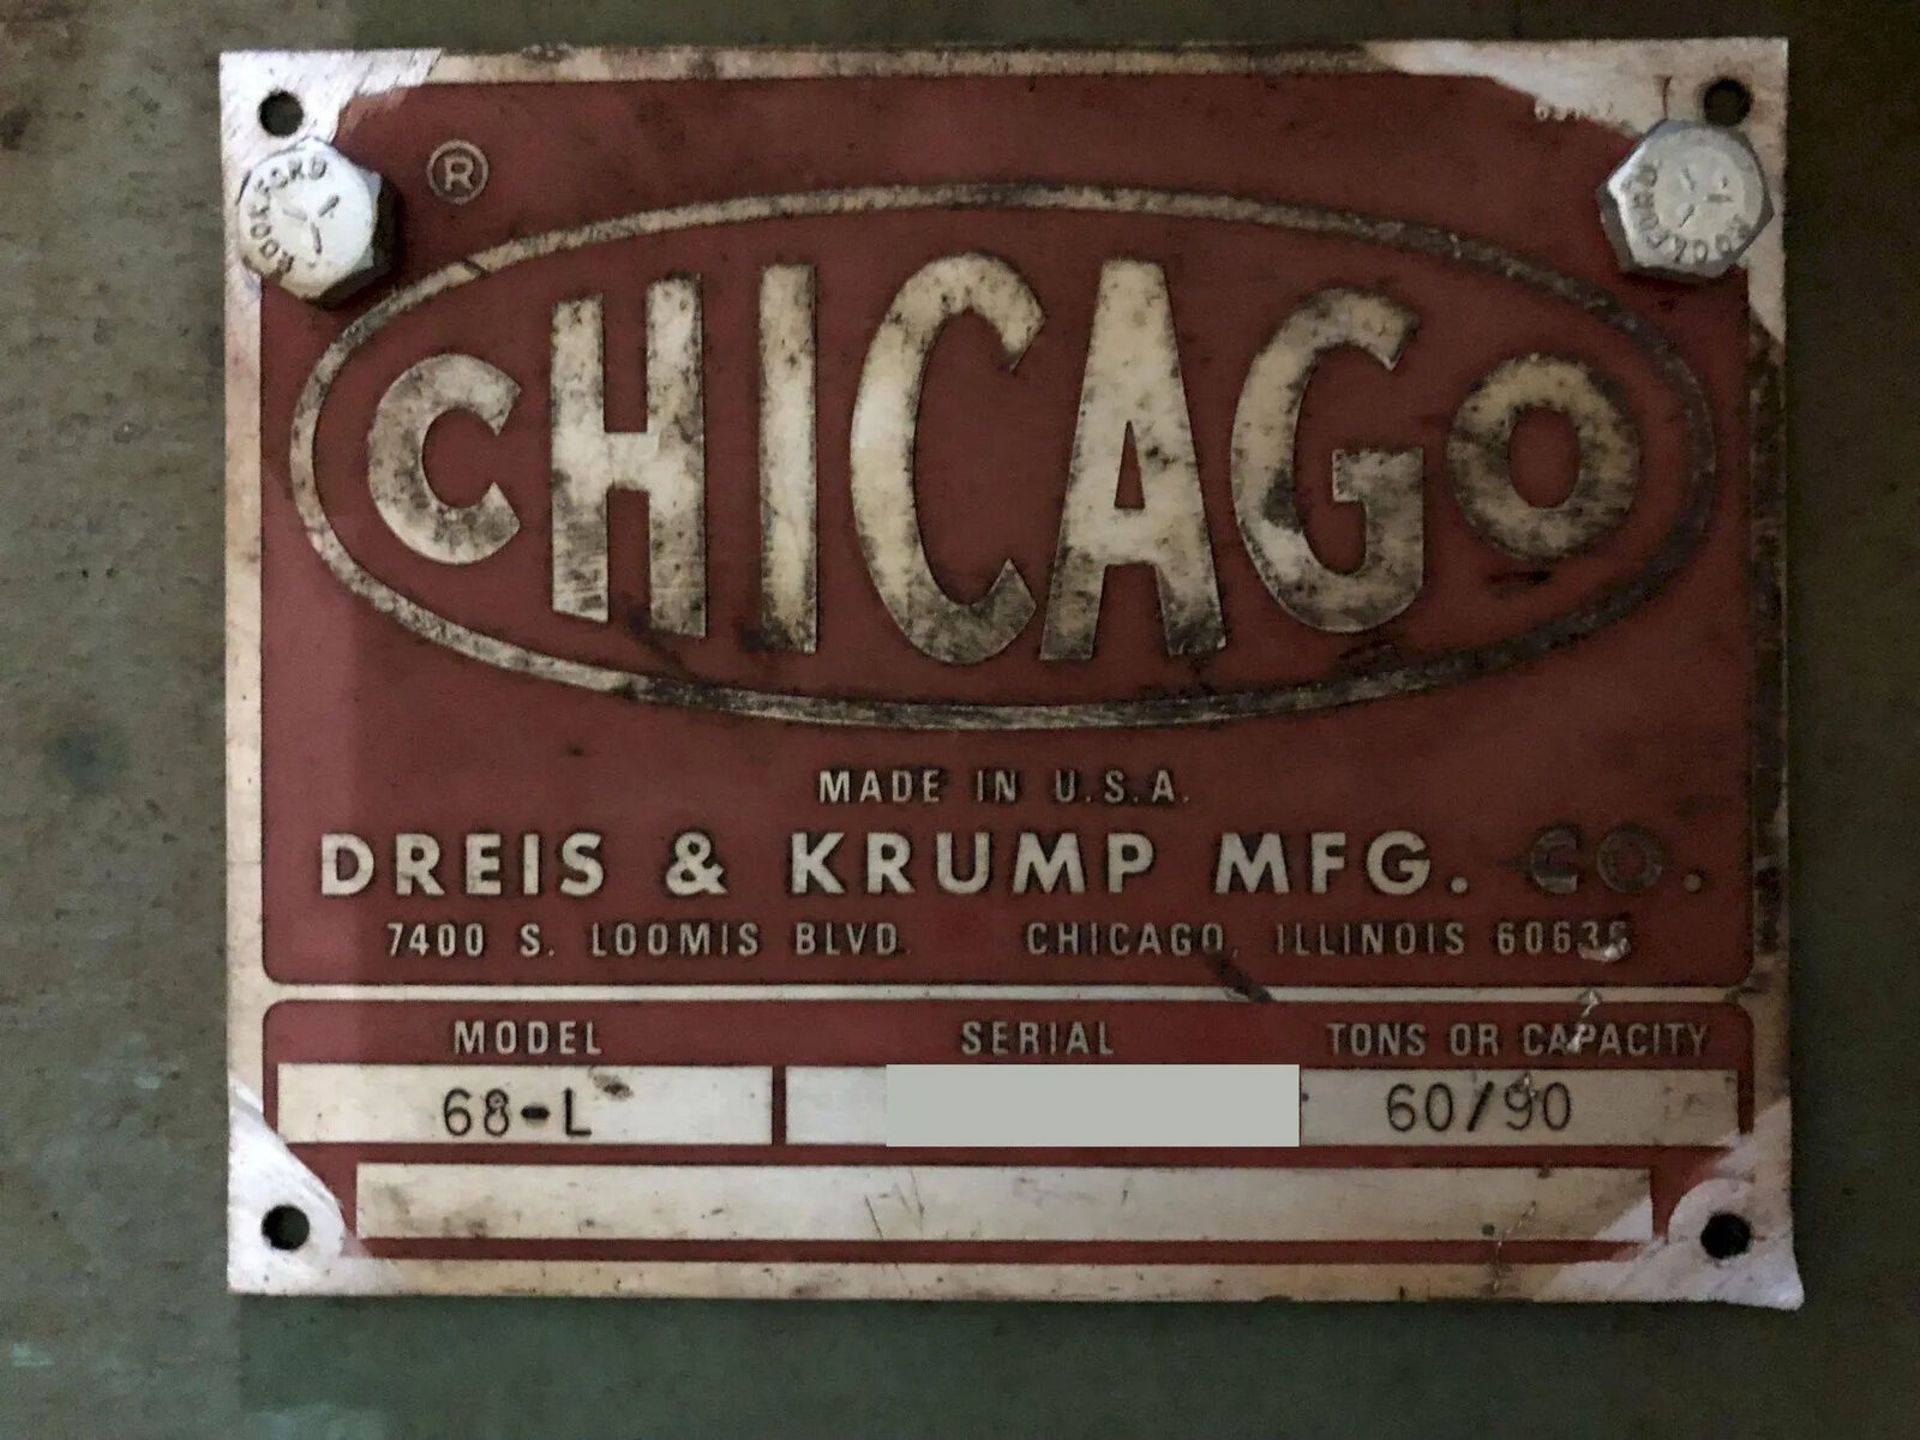 Chicago Dreis & Krump 68-L, Mechnical Press Brake - Image 10 of 10